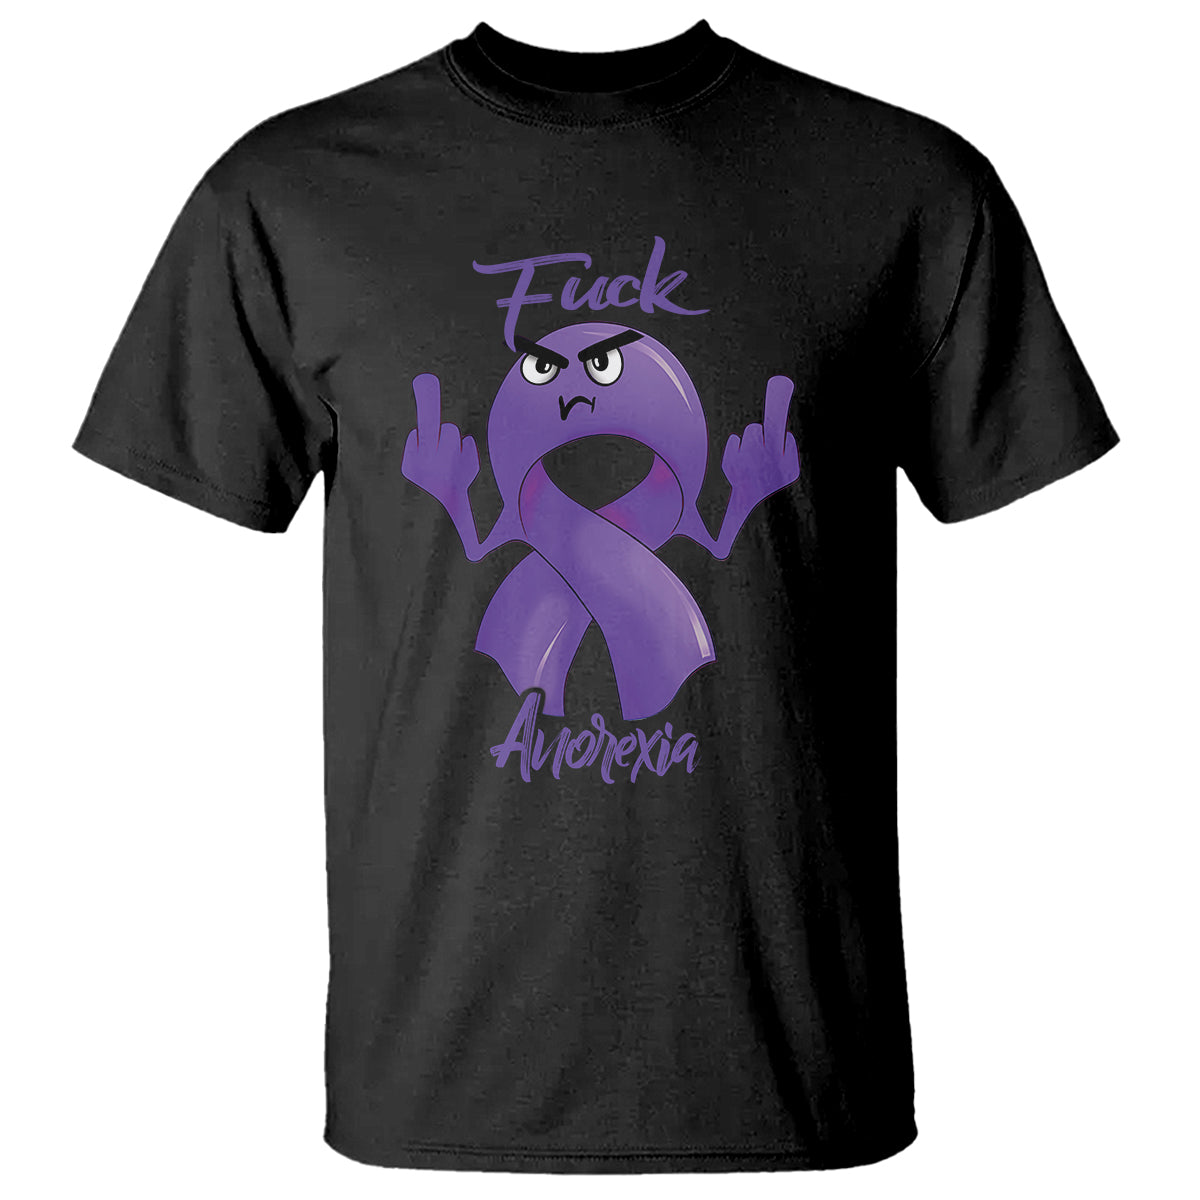 FxxK Anorexia Eating Disorder Purple Ribbon Mental Health Awareness T Shirt TS09 Black Printyourwear